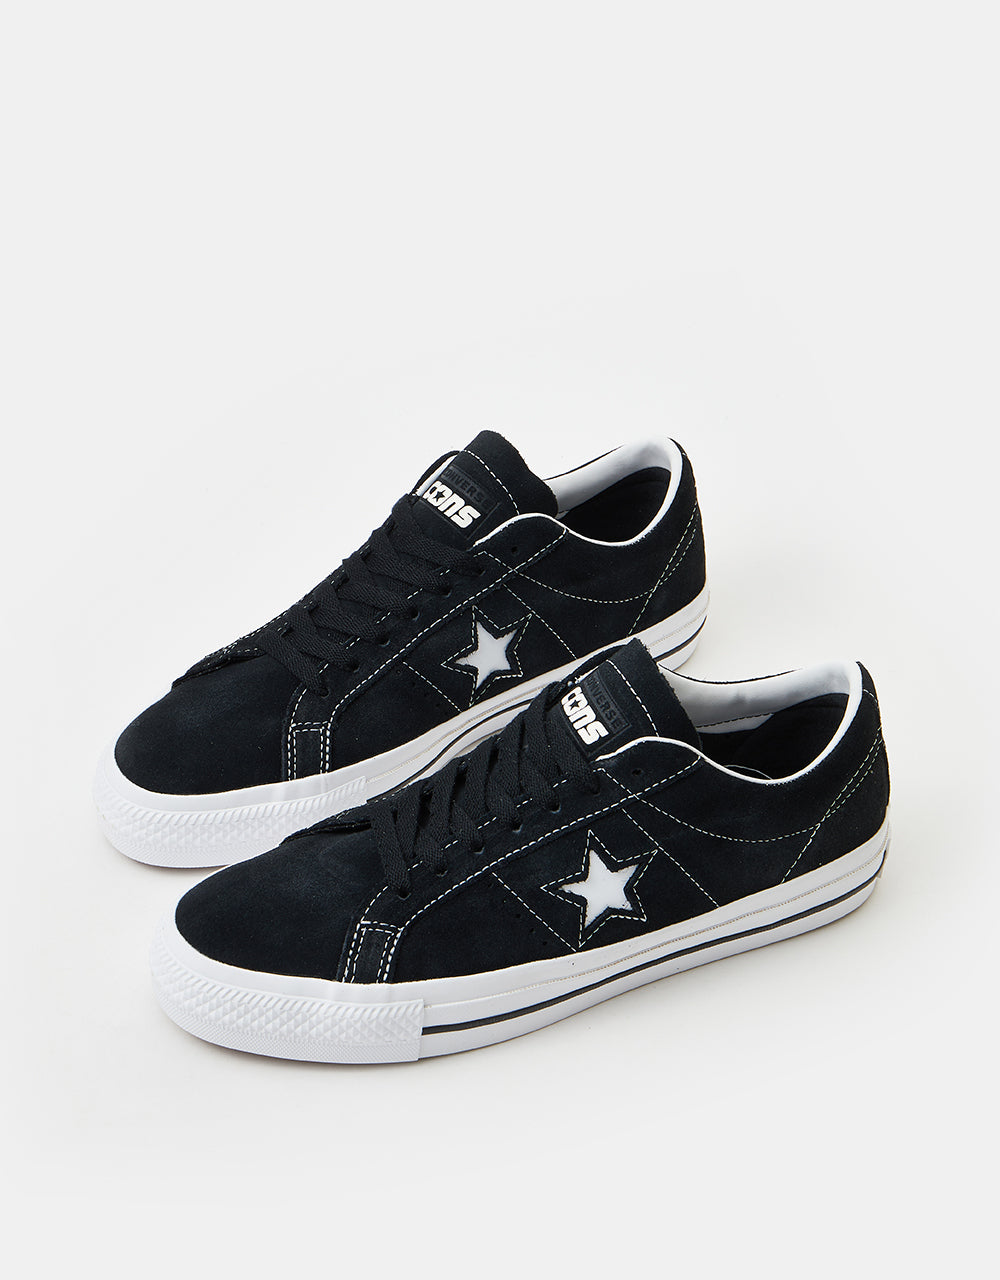 Converse One Star Pro Ox Skate Shoes - Black/White/White